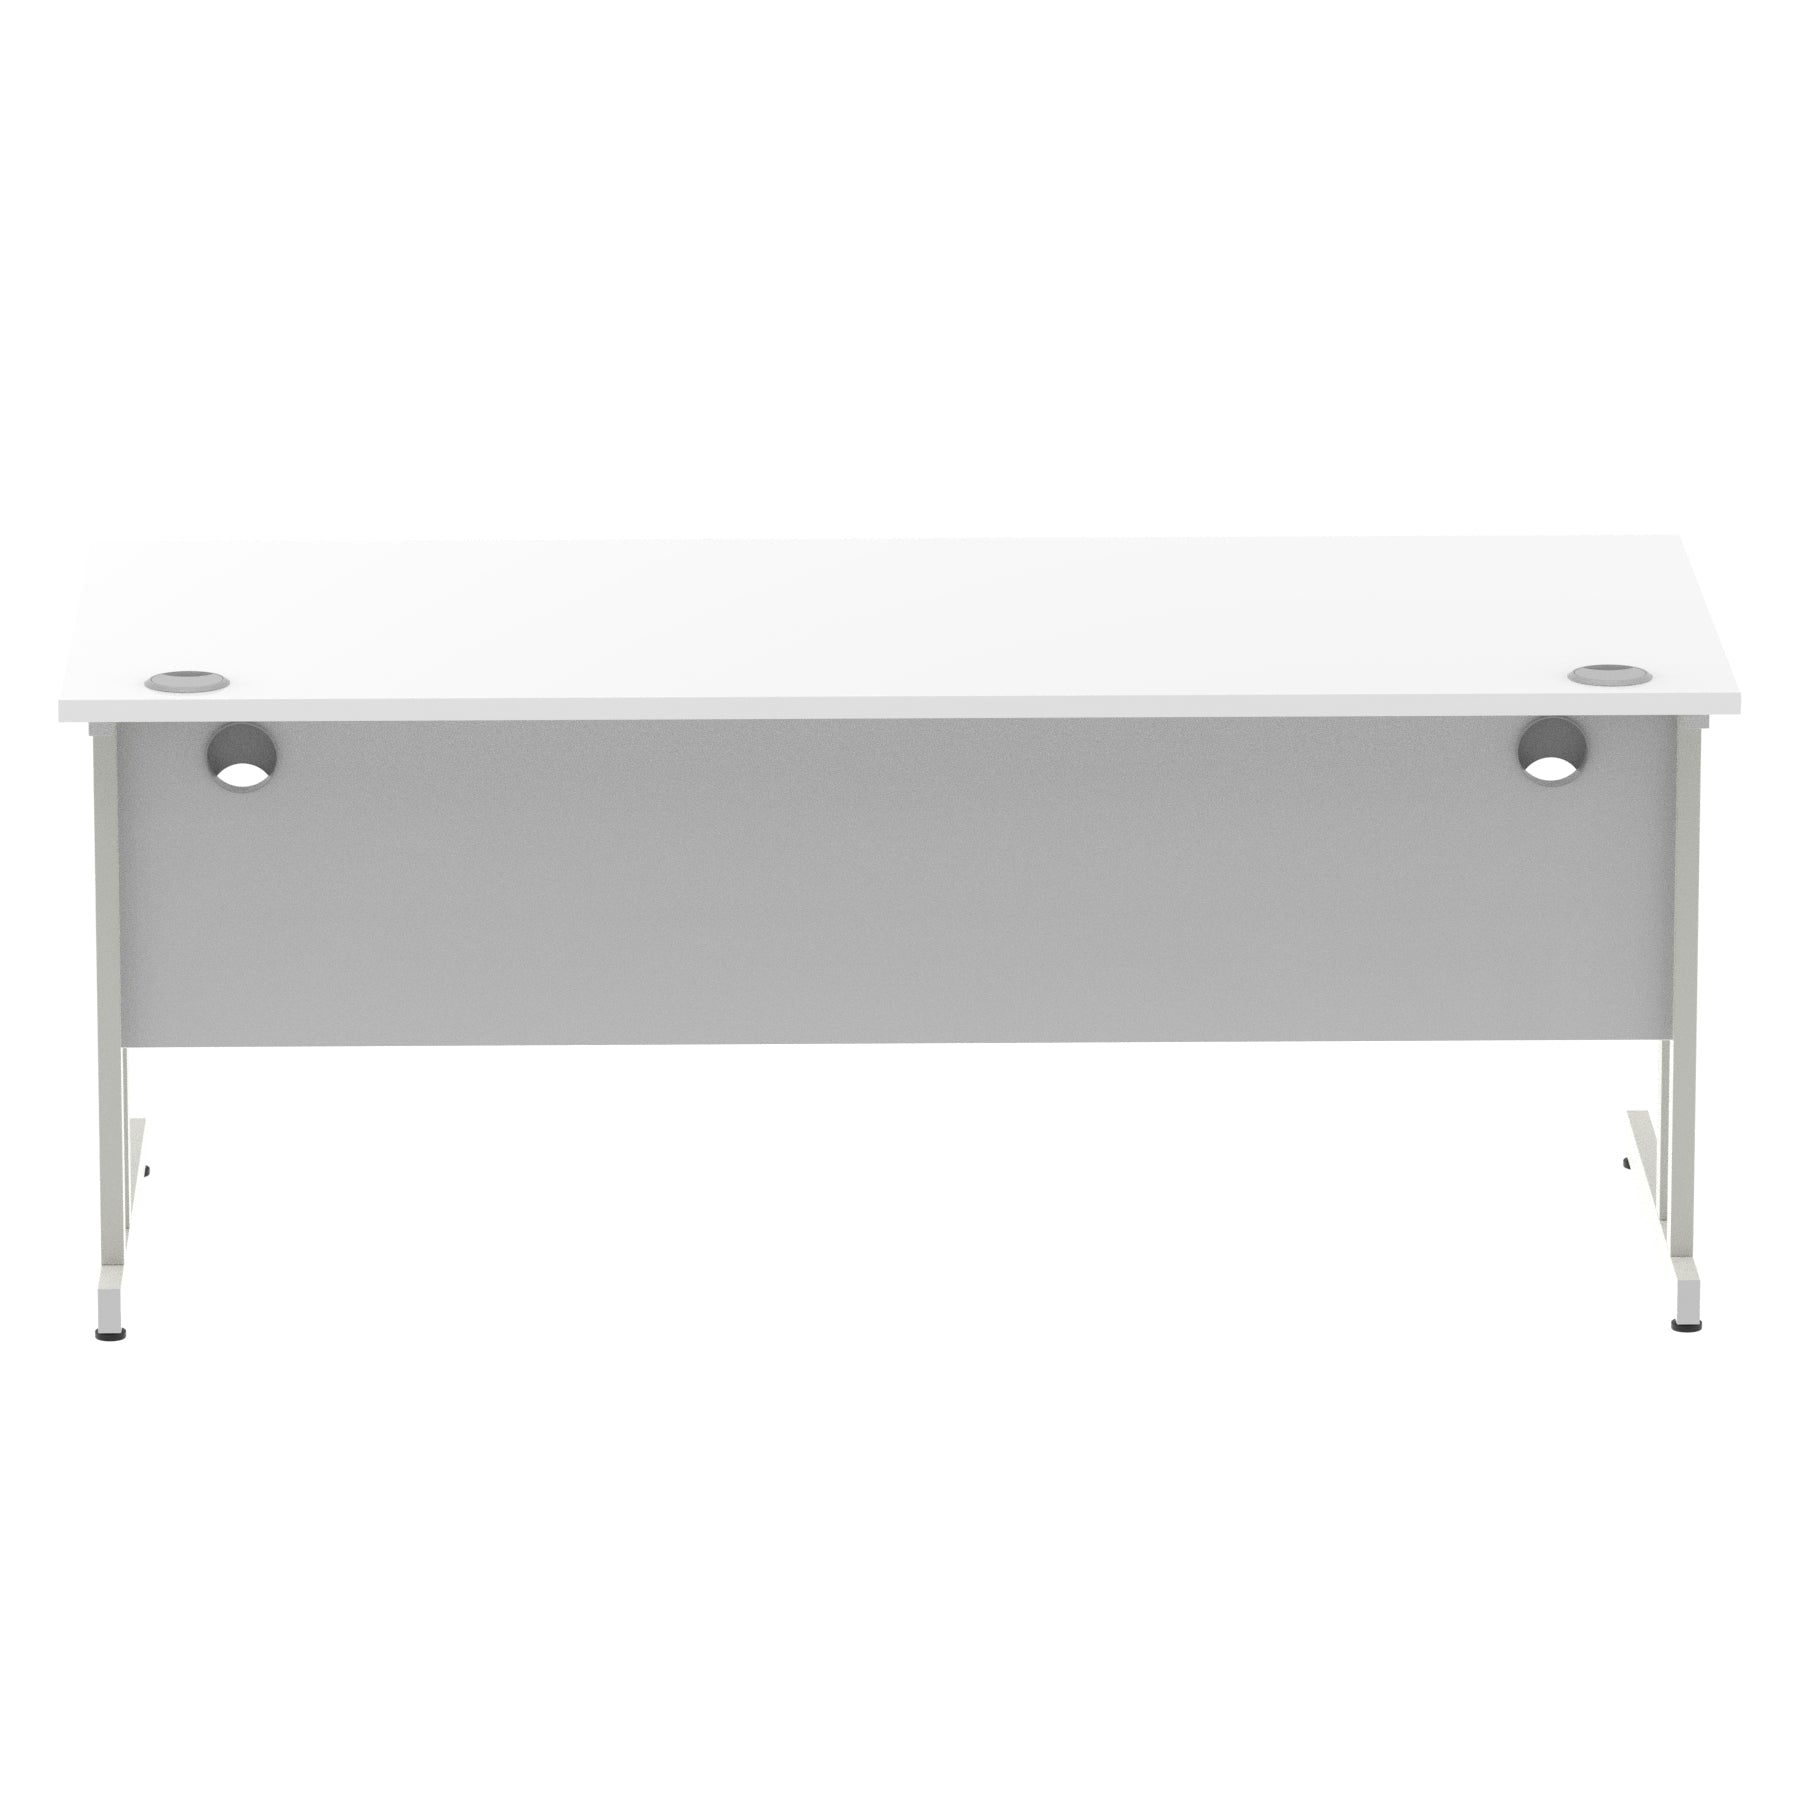 Impulse 1800mm Straight Desk Cantilever Leg - Rectangular MFC Table, 1800x800 Top, Silver/White/Black Frame, 5-Year Guarantee, Self-Assembly